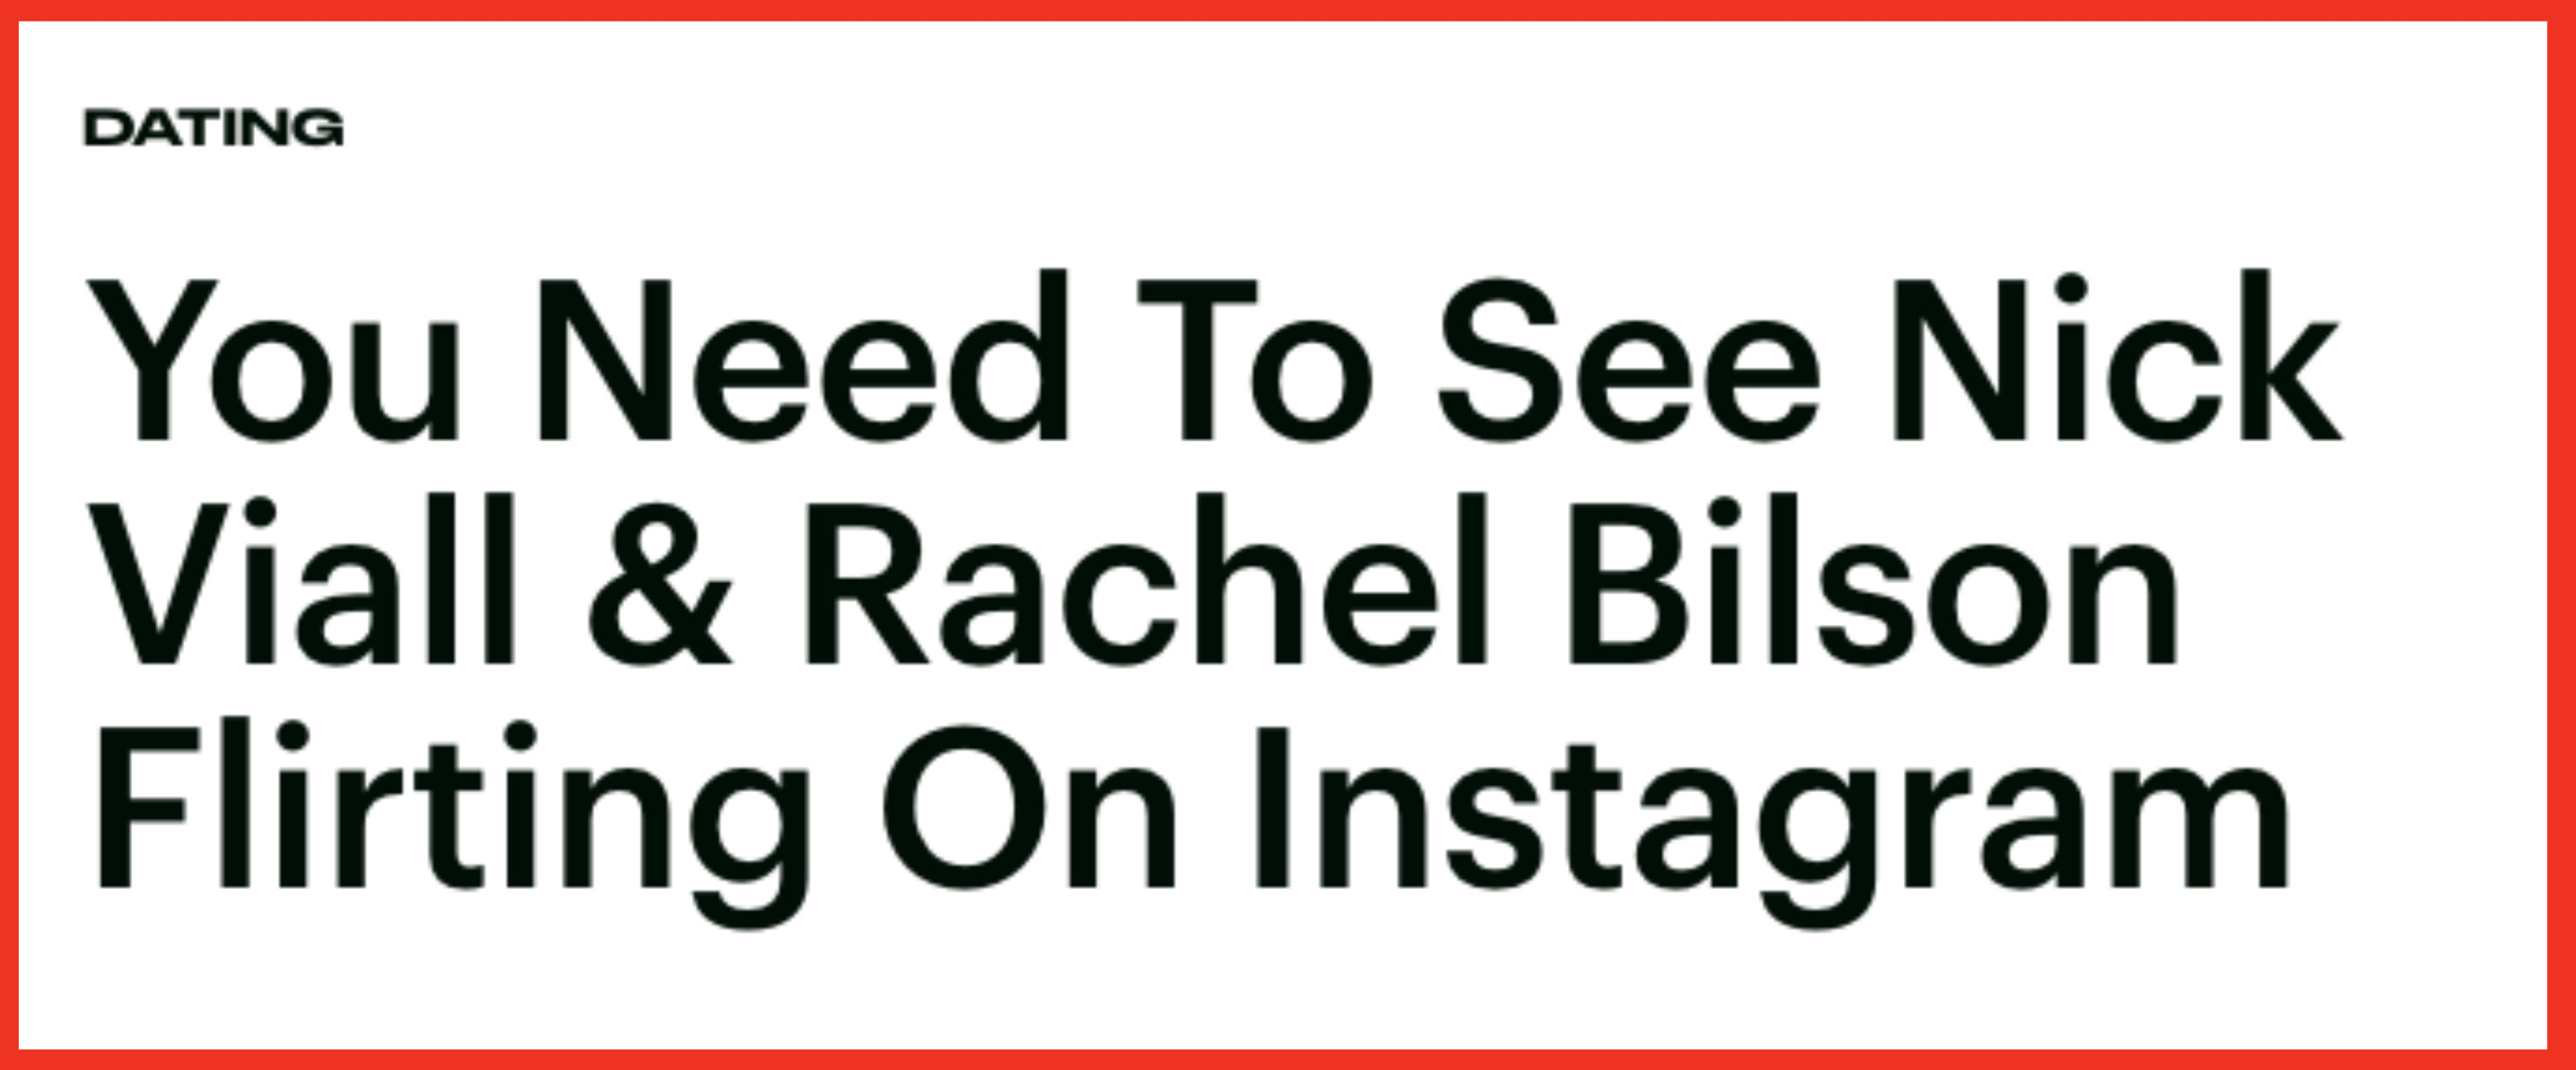 Headline: &quot;You Need To See Nick Viall &amp;amp; Rachel Bilson Flirting On Instagram&quot;